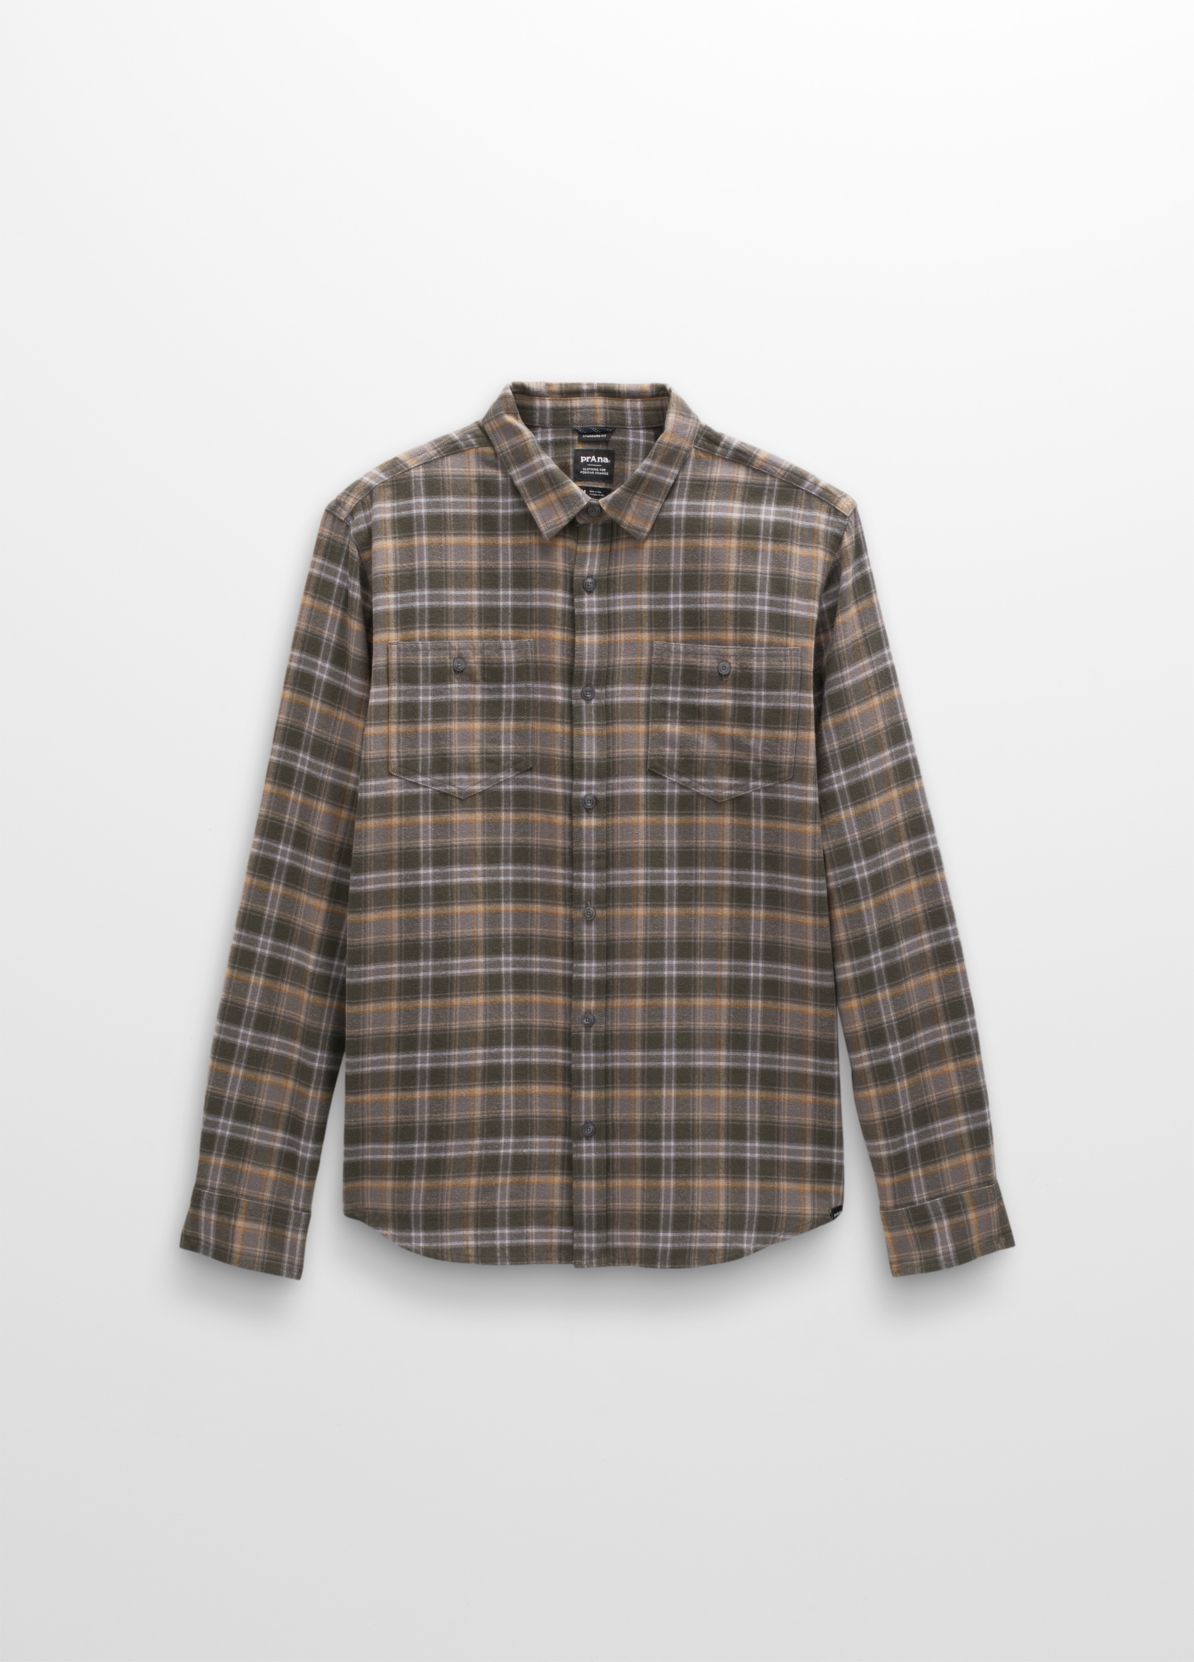 Prana - Dolberg Flannel Shirt